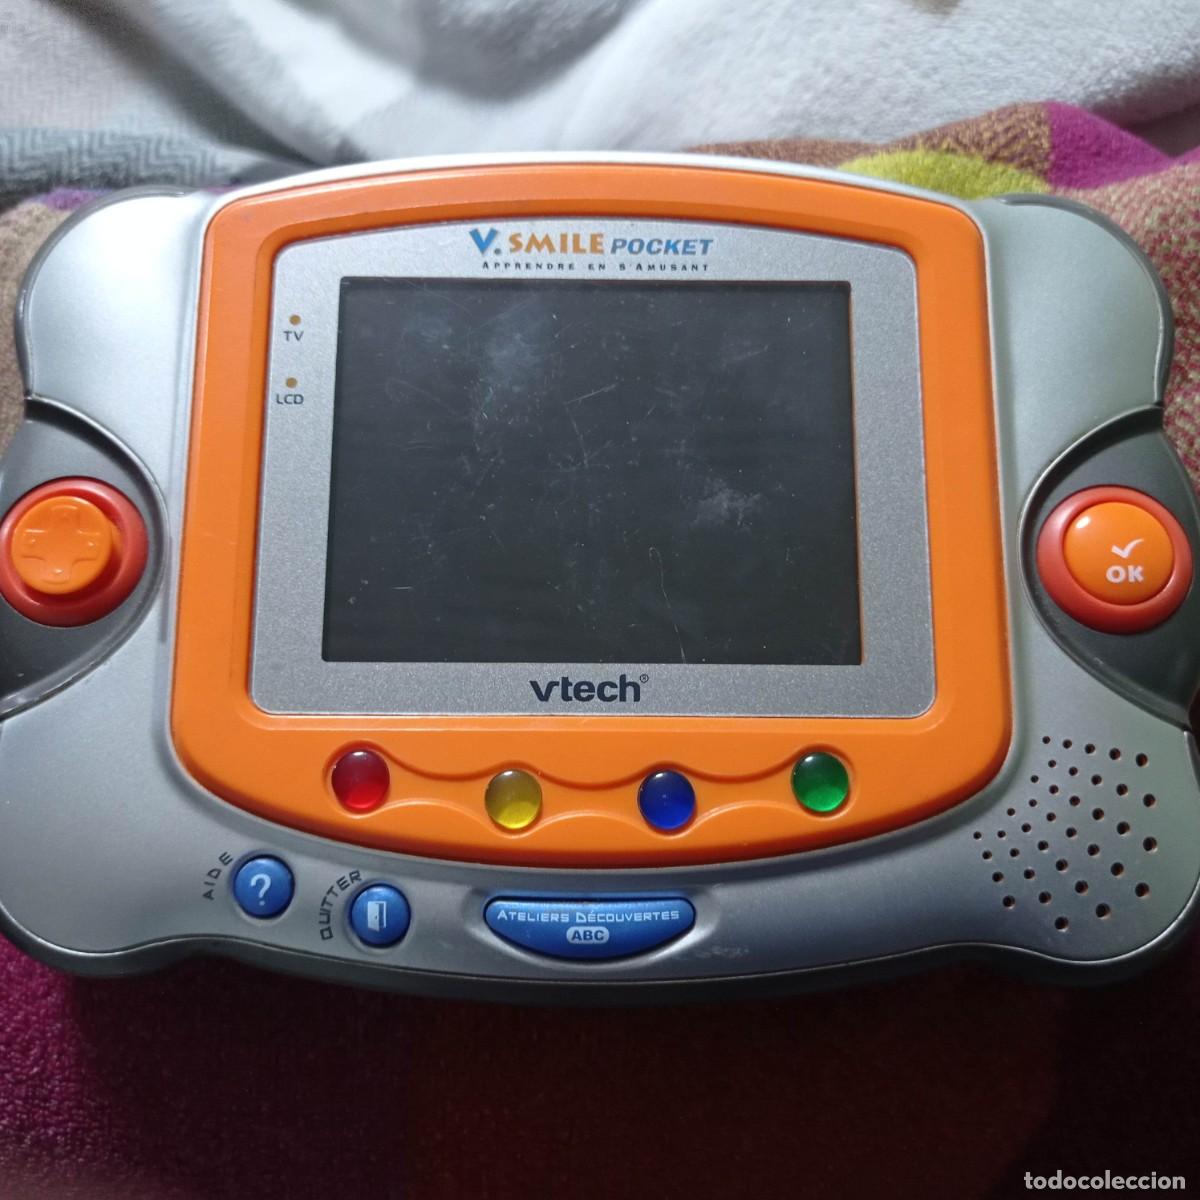 VTECH V.Smile Pocket - Console de jeu portable